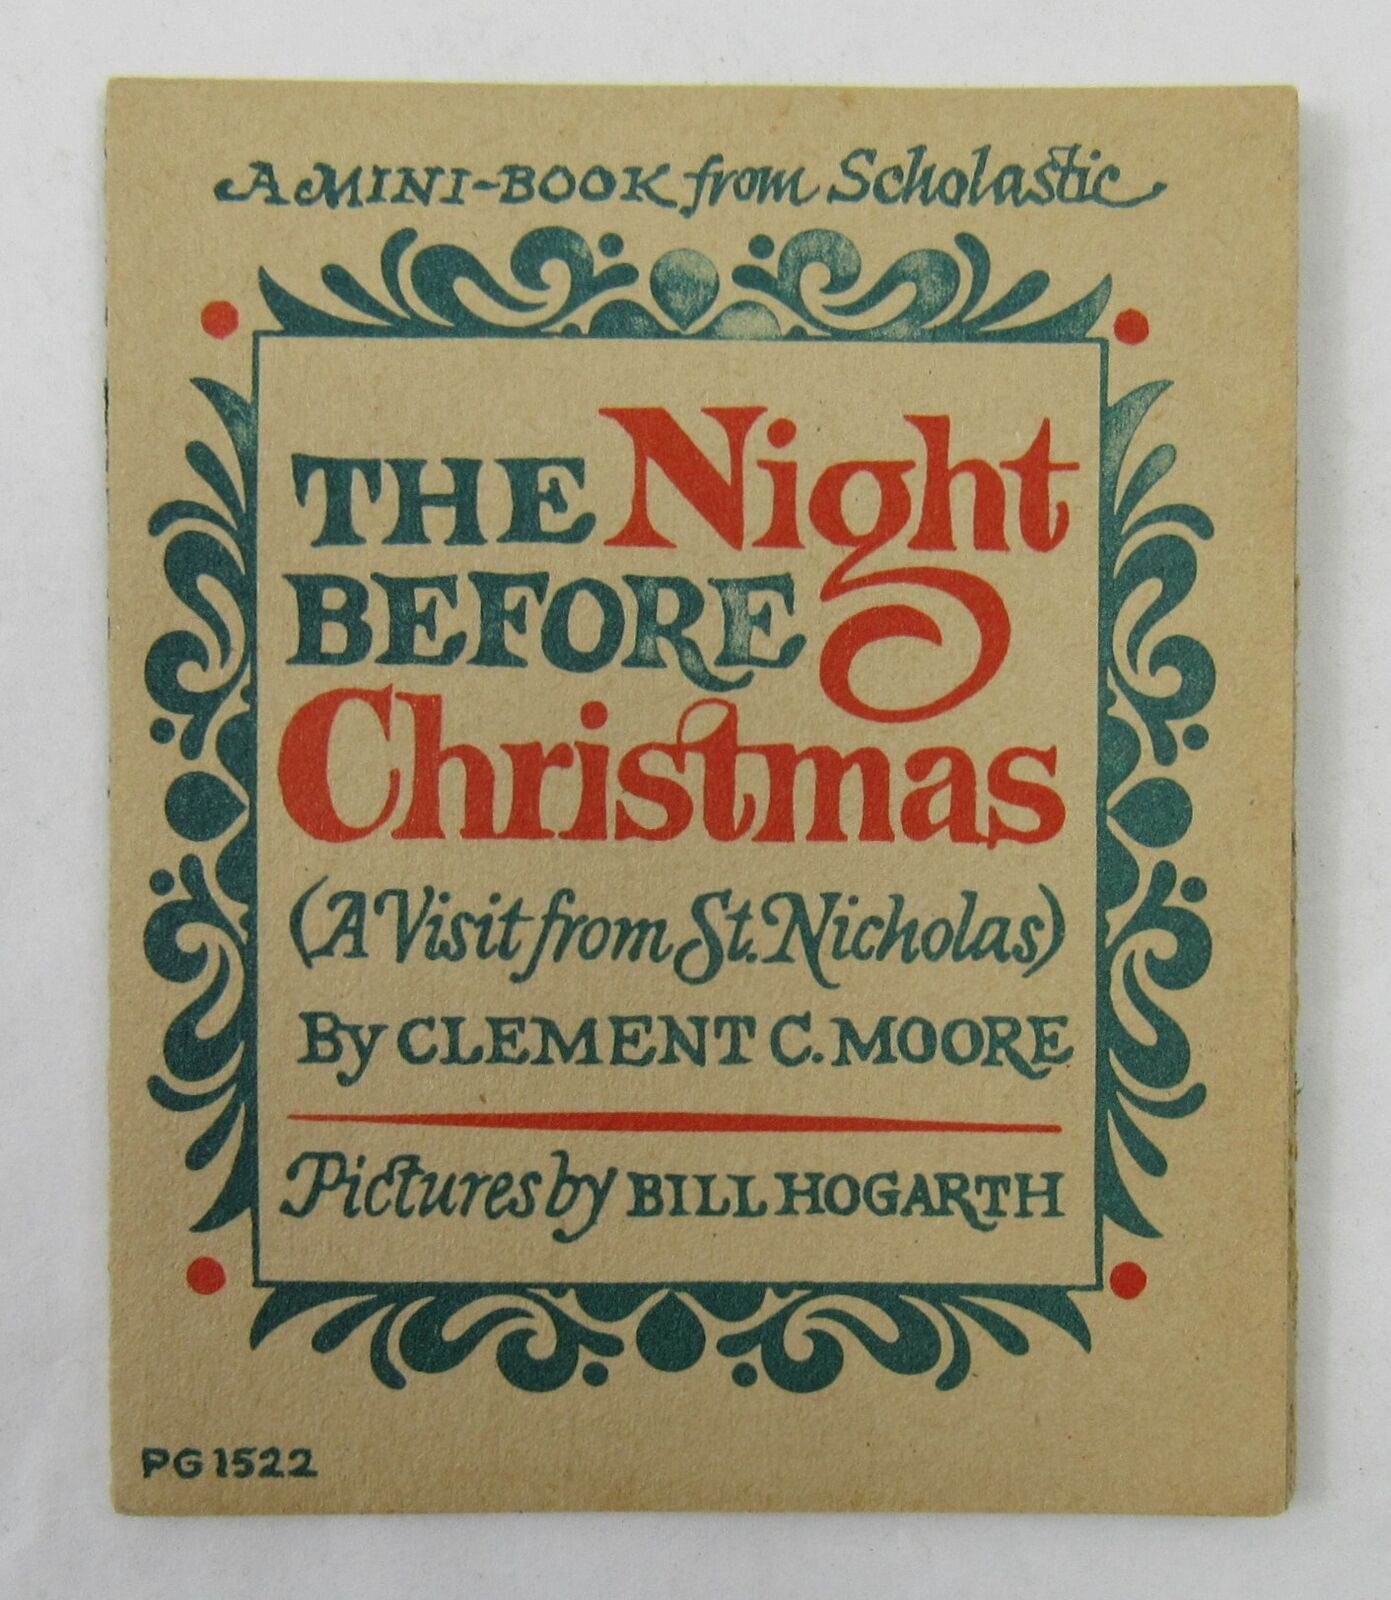 VTG 1973 SCHOLASTIC MAGAZINES BOOKLET THE NIGHT BEFORE CHRISTMAS BILL HOGARTH